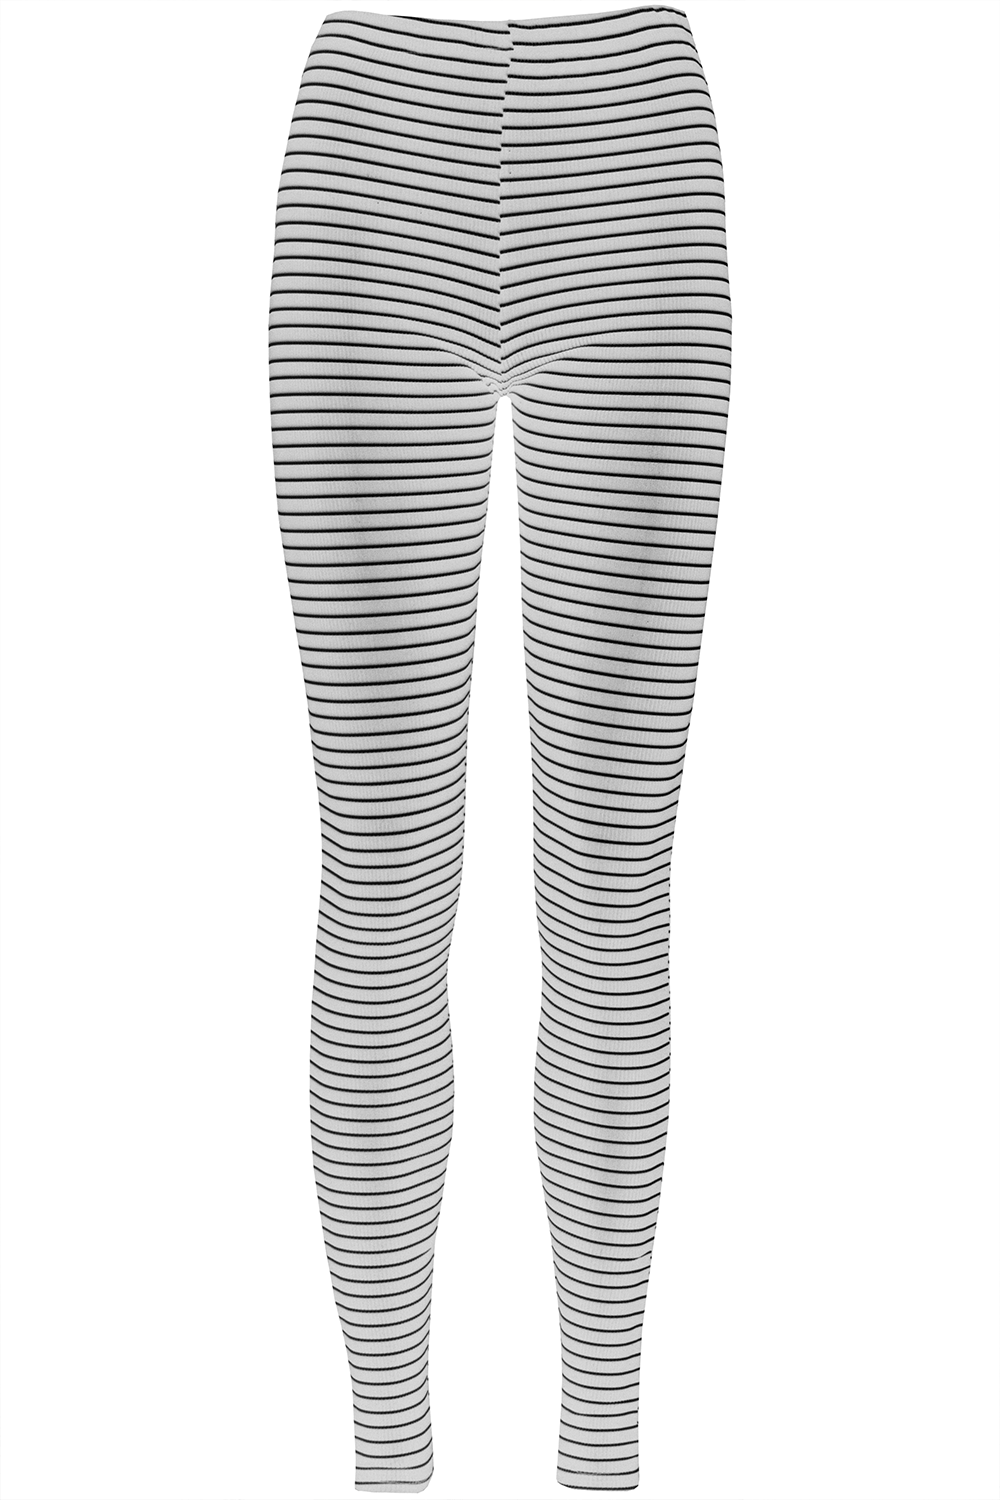 Monochrome High Waisted Stretch Striped Leggings - bejealous-com